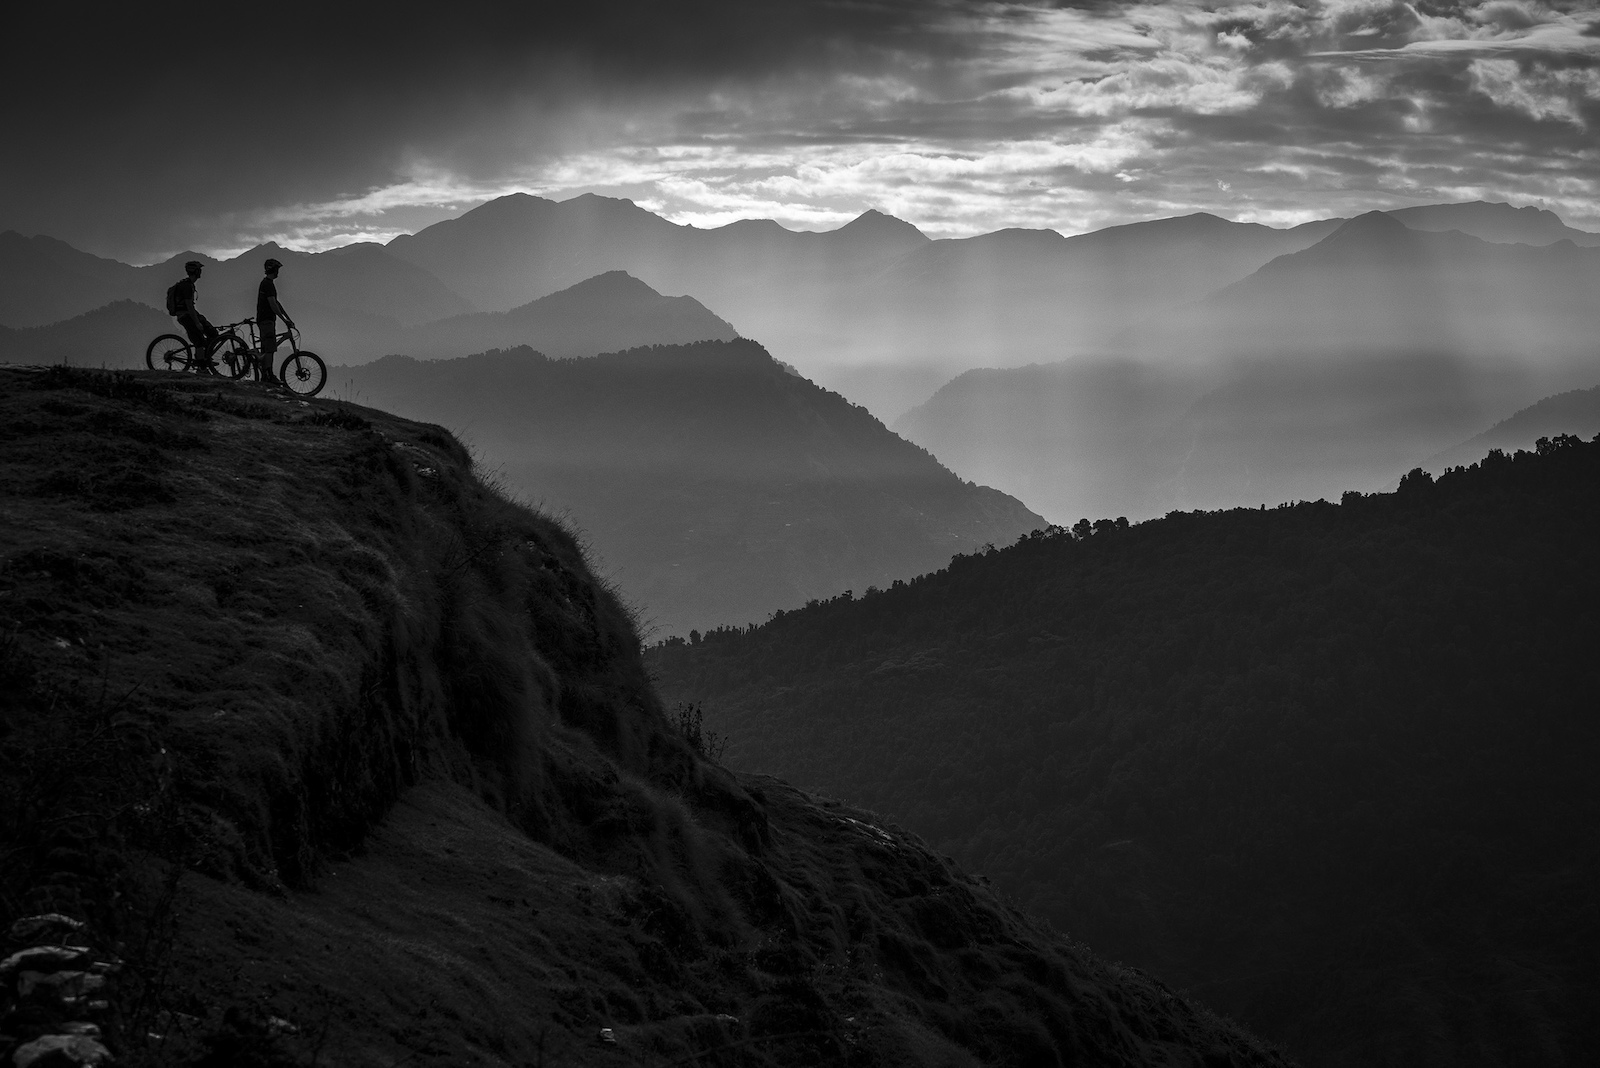 Munsyari Mountain Bike Survey PIC Andy Lloyd www.andylloyd.photography